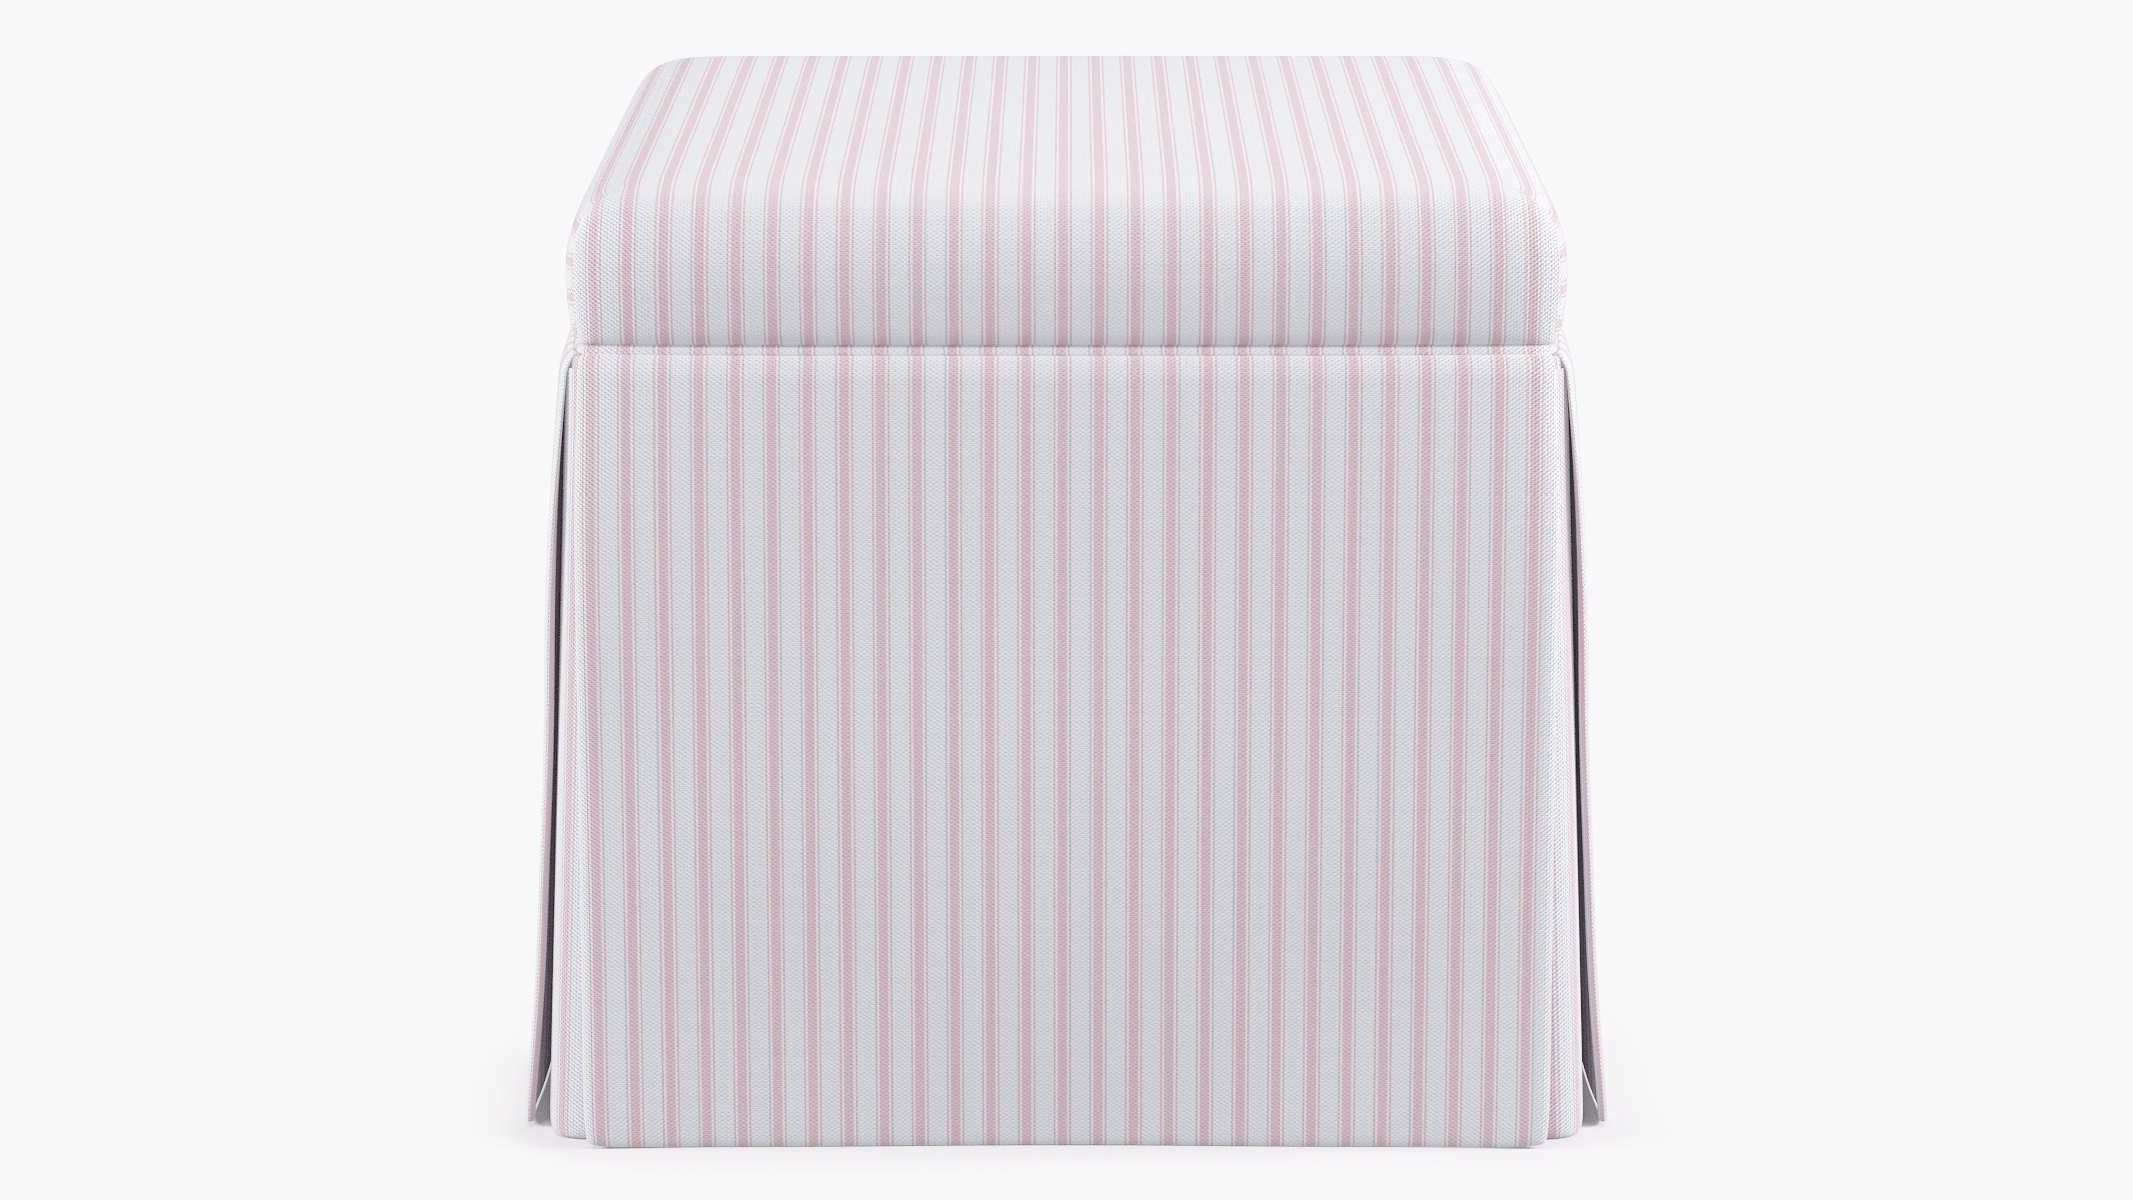 Skirted Storage Ottoman, Pink Classic Ticking Stripe - Image 0